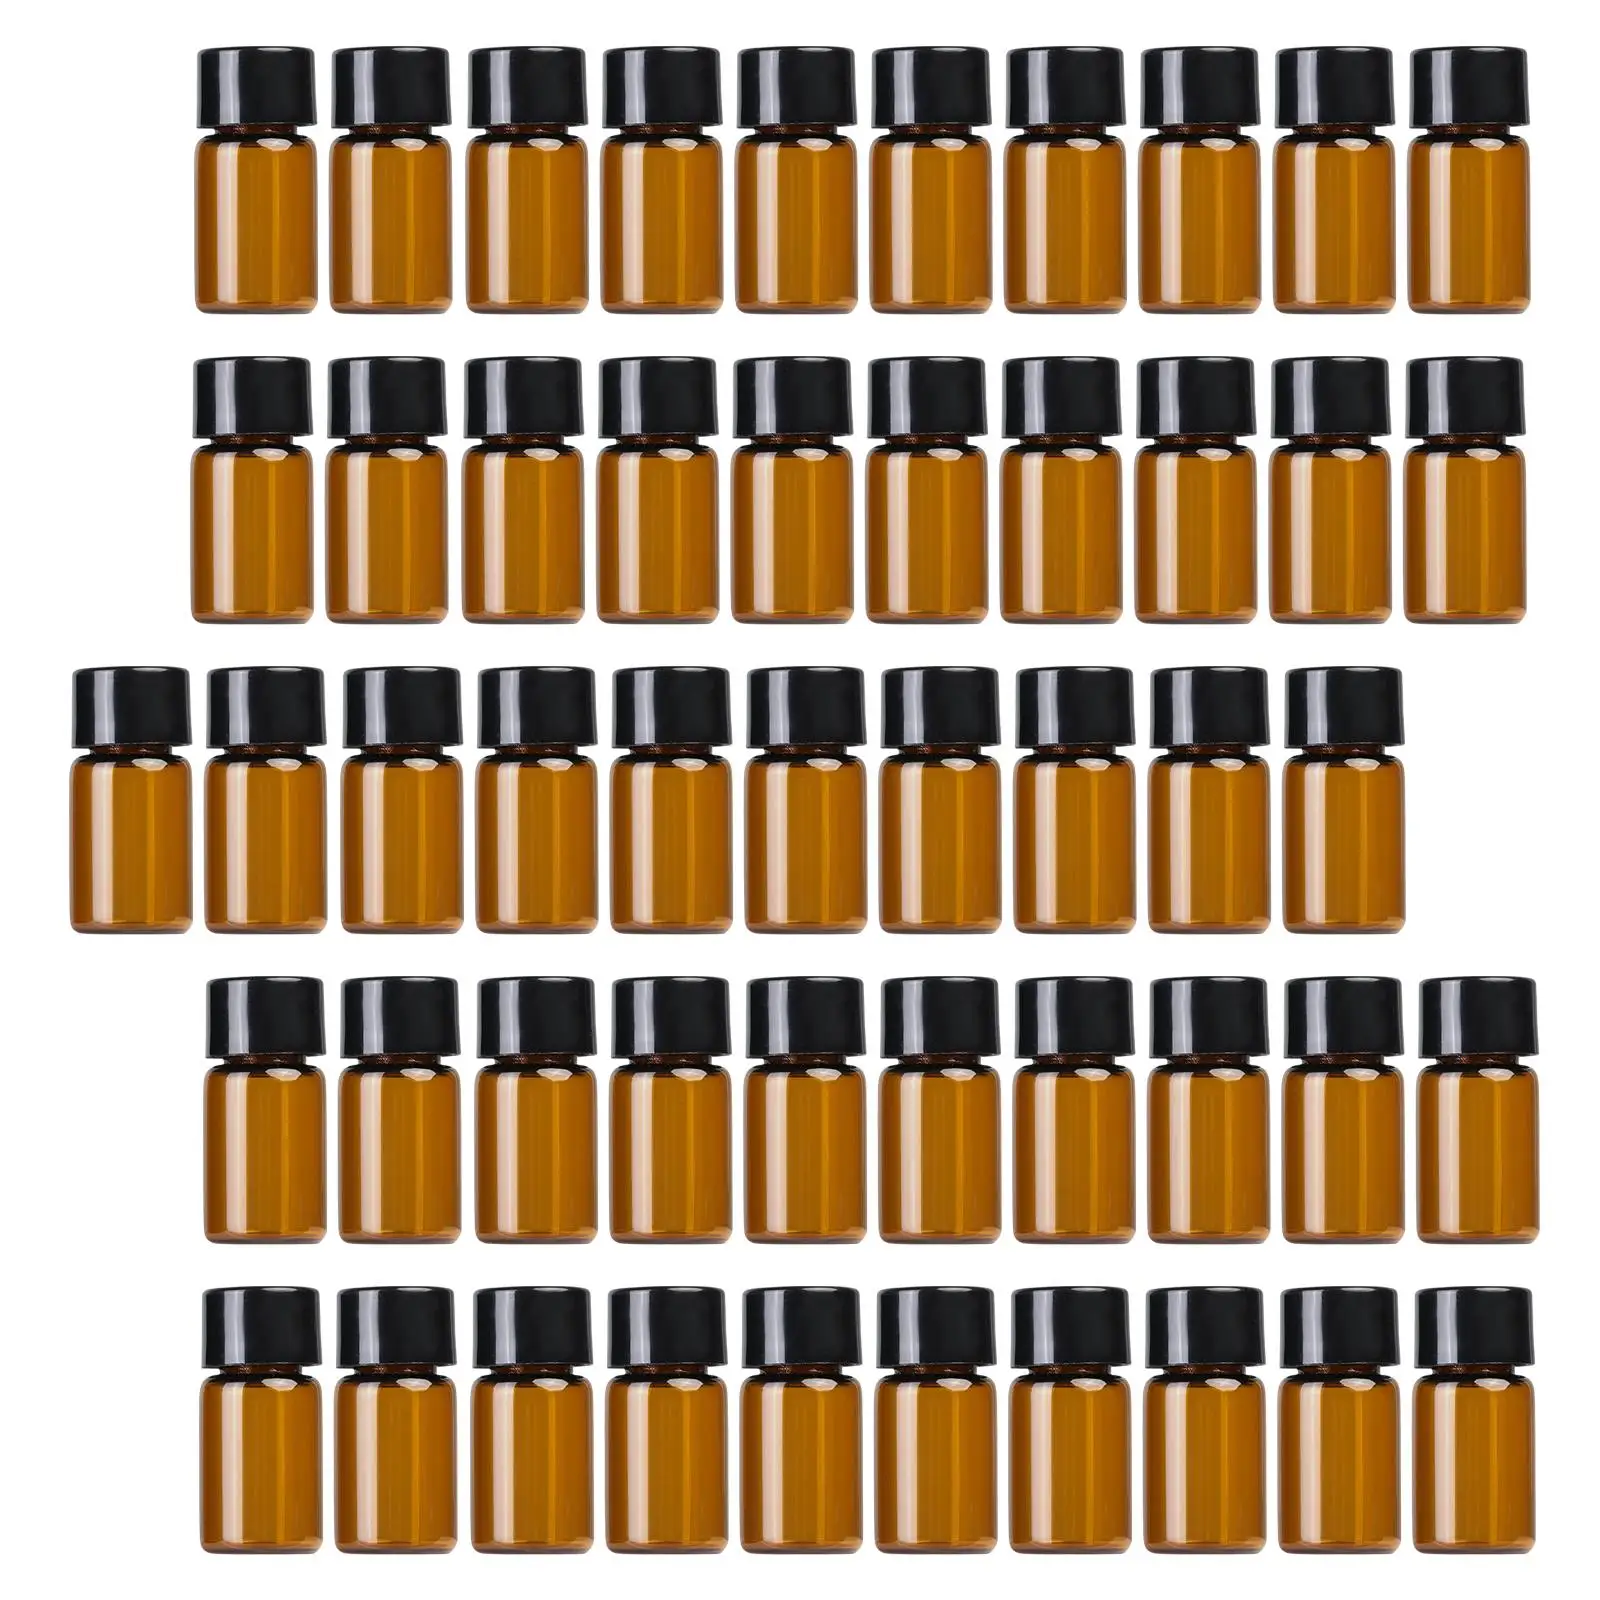 50Pcs Mini Oils Vials Portable Durable Leakproof Tubes Reusable Holder Travel Empty Glass Bottles for Liquid Perfume Samples